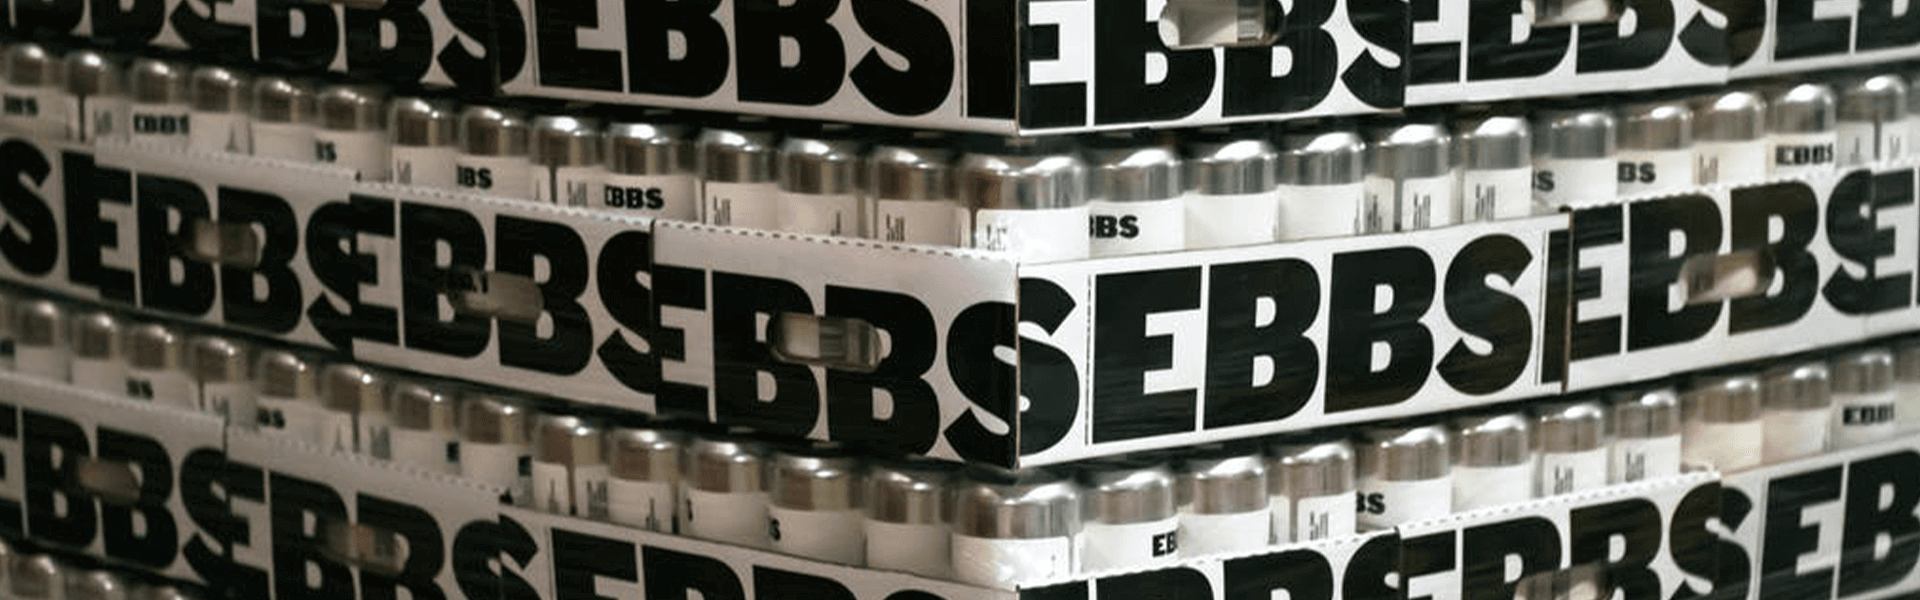 EBBS Brewing Co.